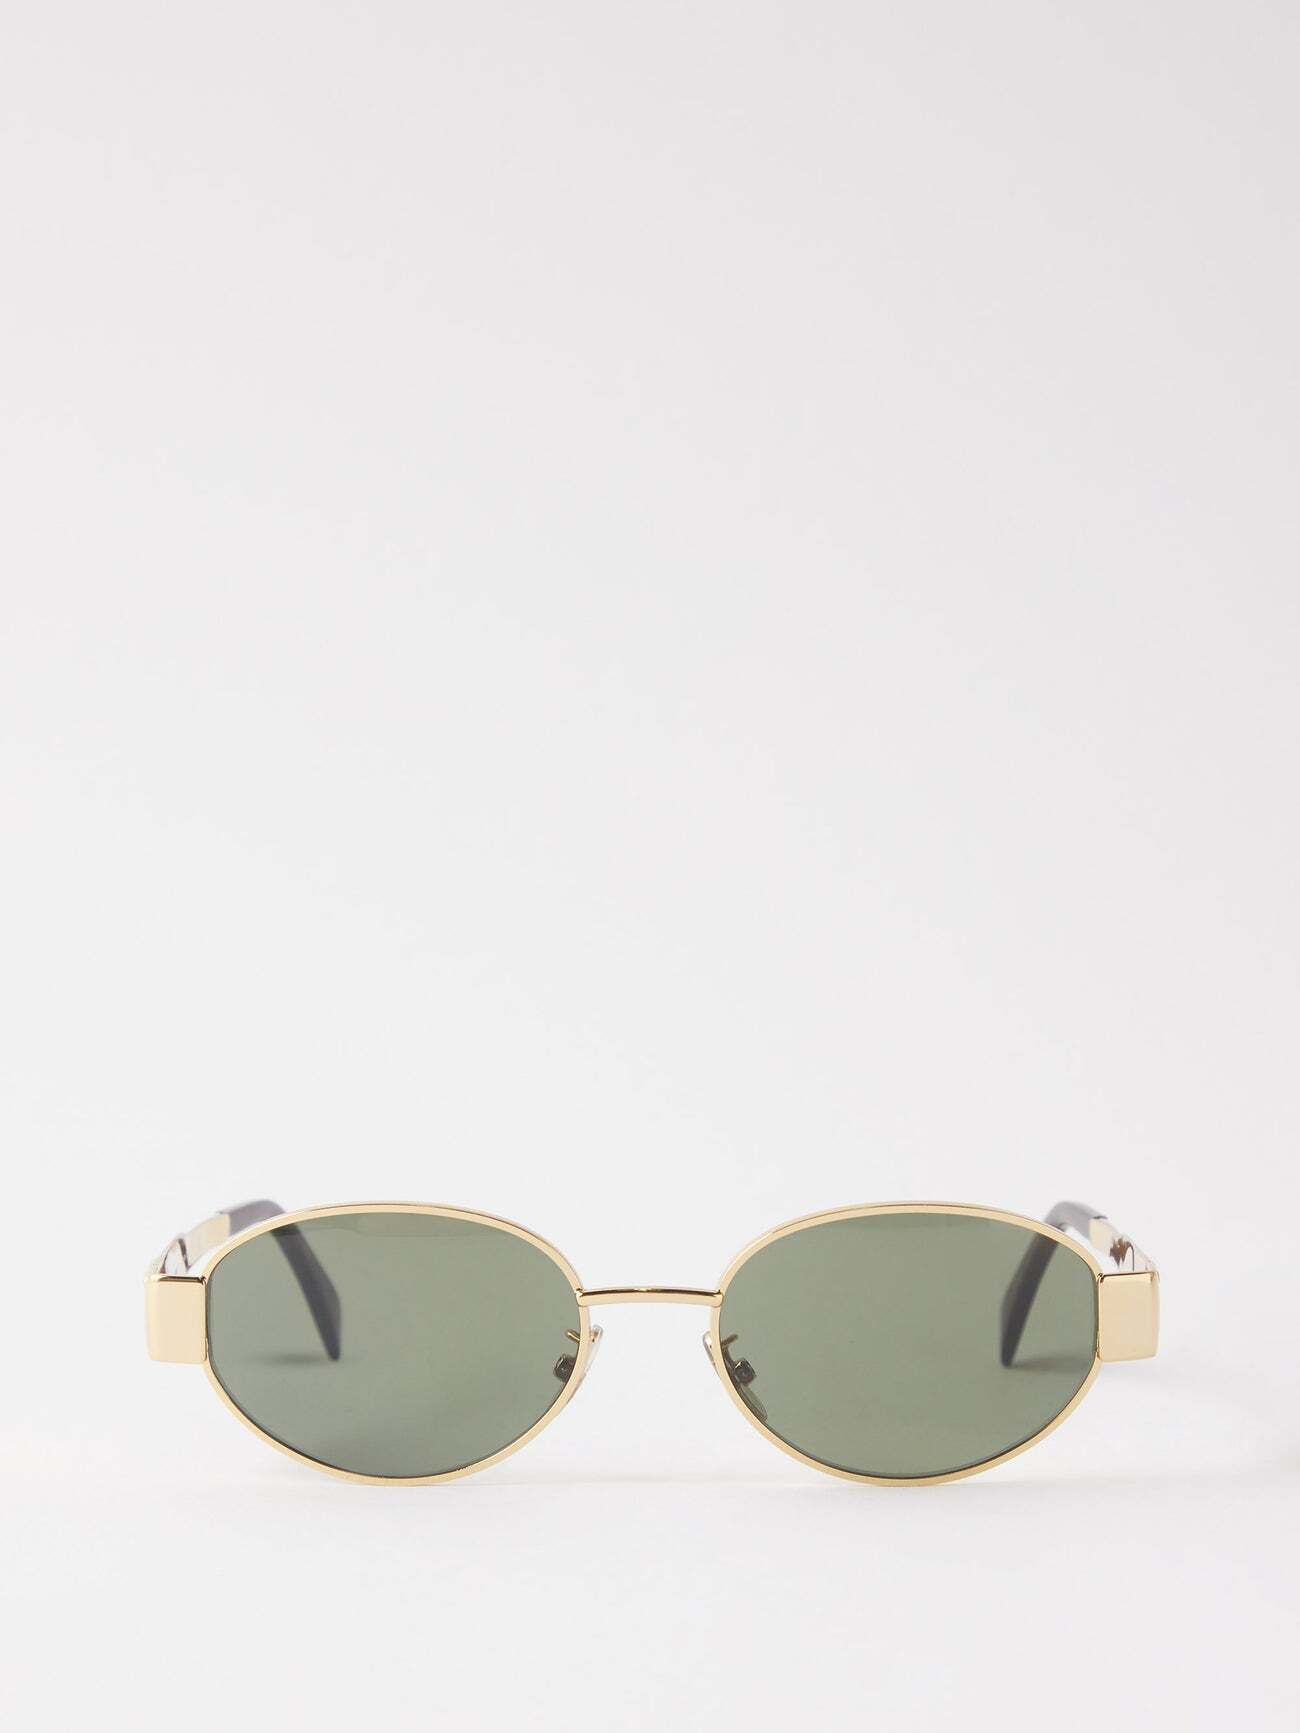 Celine Eyewear - Triomphe Round Metal Sunglasses - Womens - Green Gold